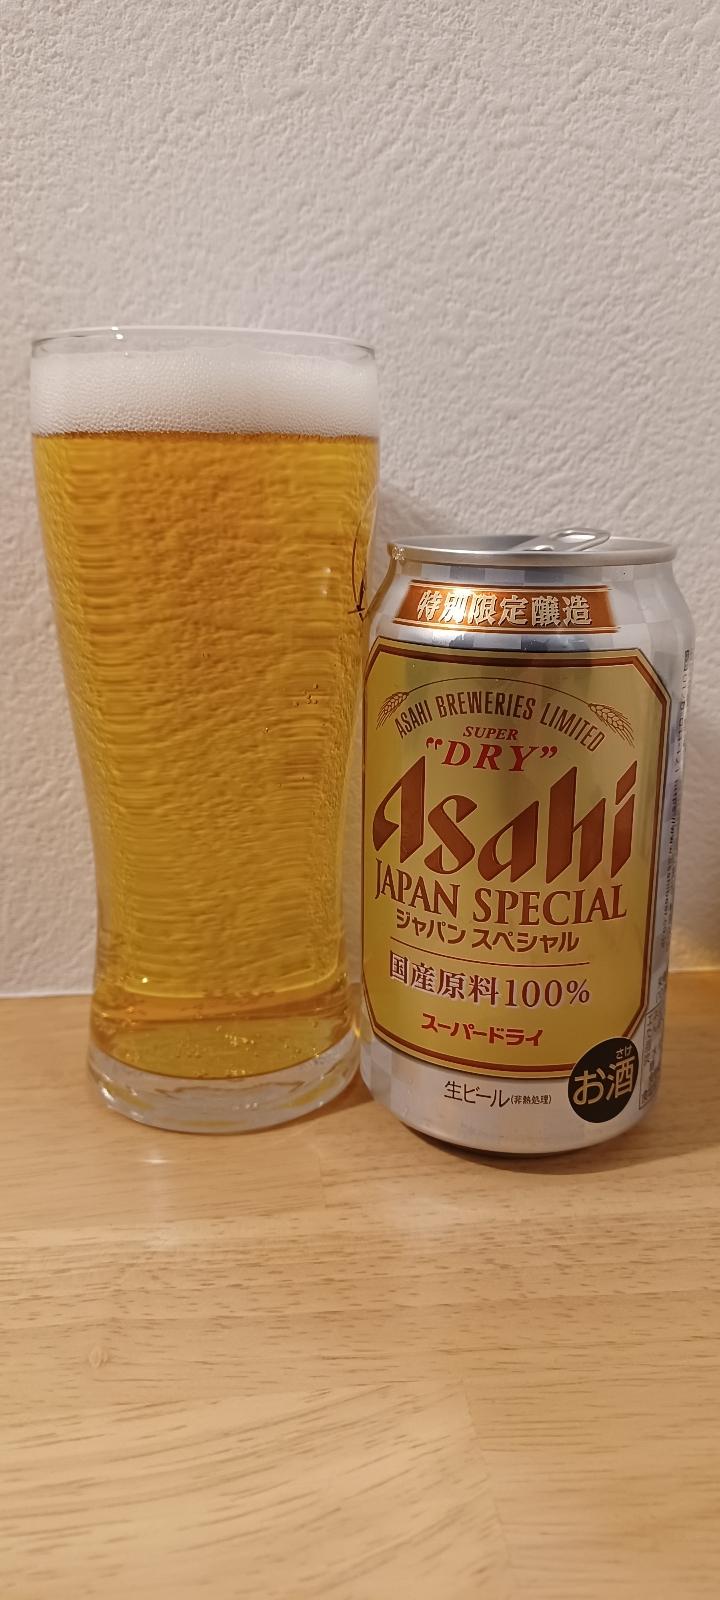 Asahi Super Dry Japan Special (2021)